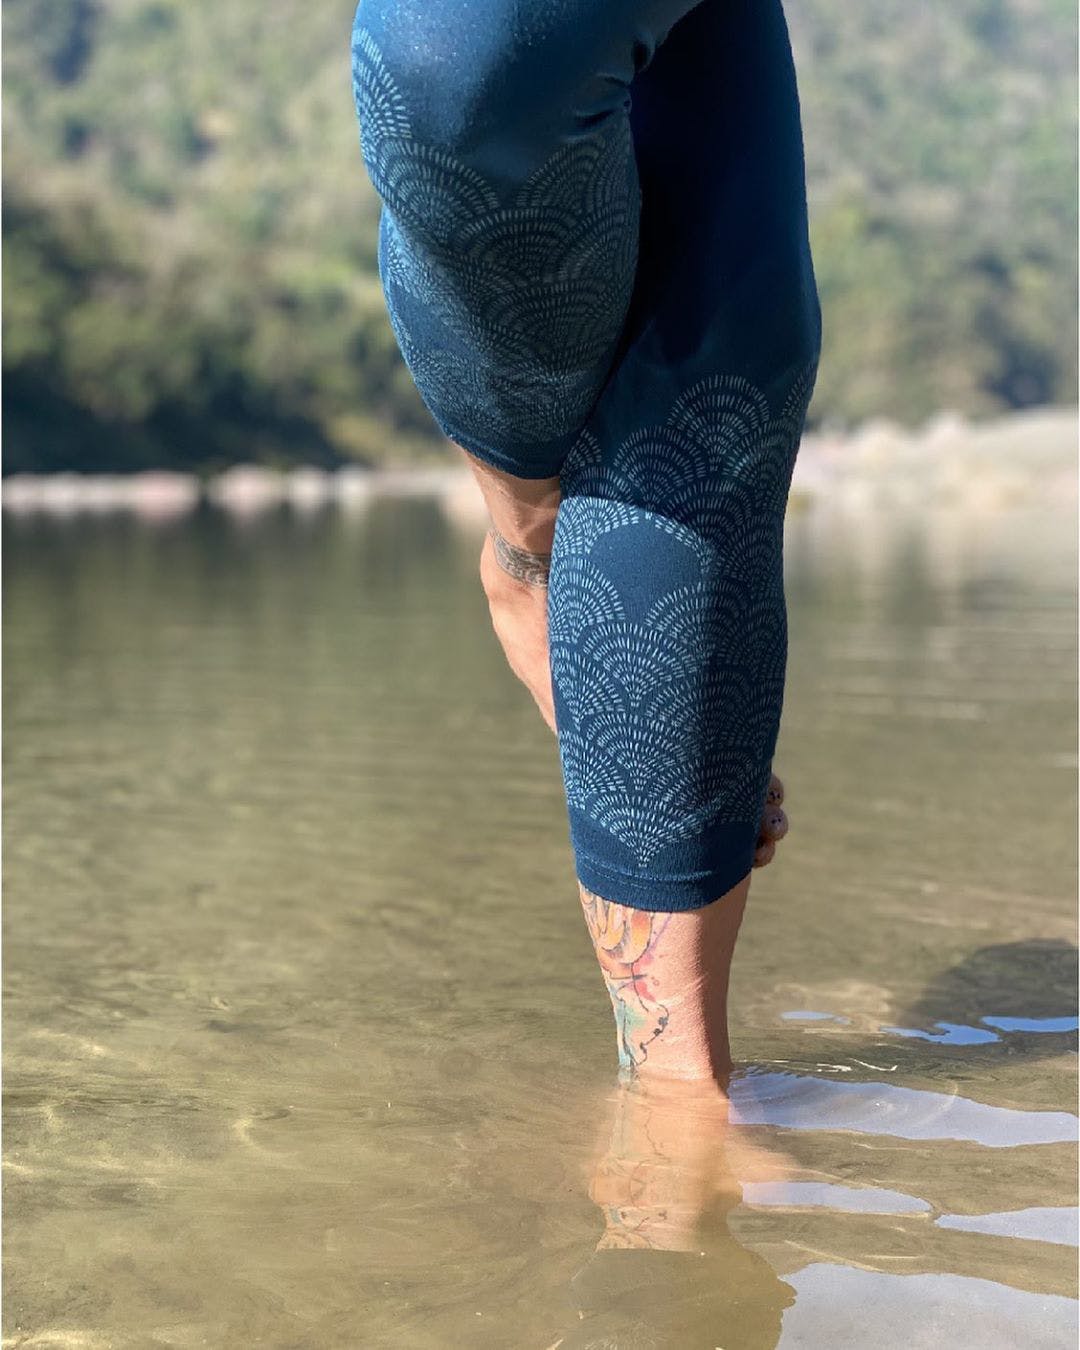 PROYOG Women's Yoga Pants with Foldable Waistband Organic Cotton